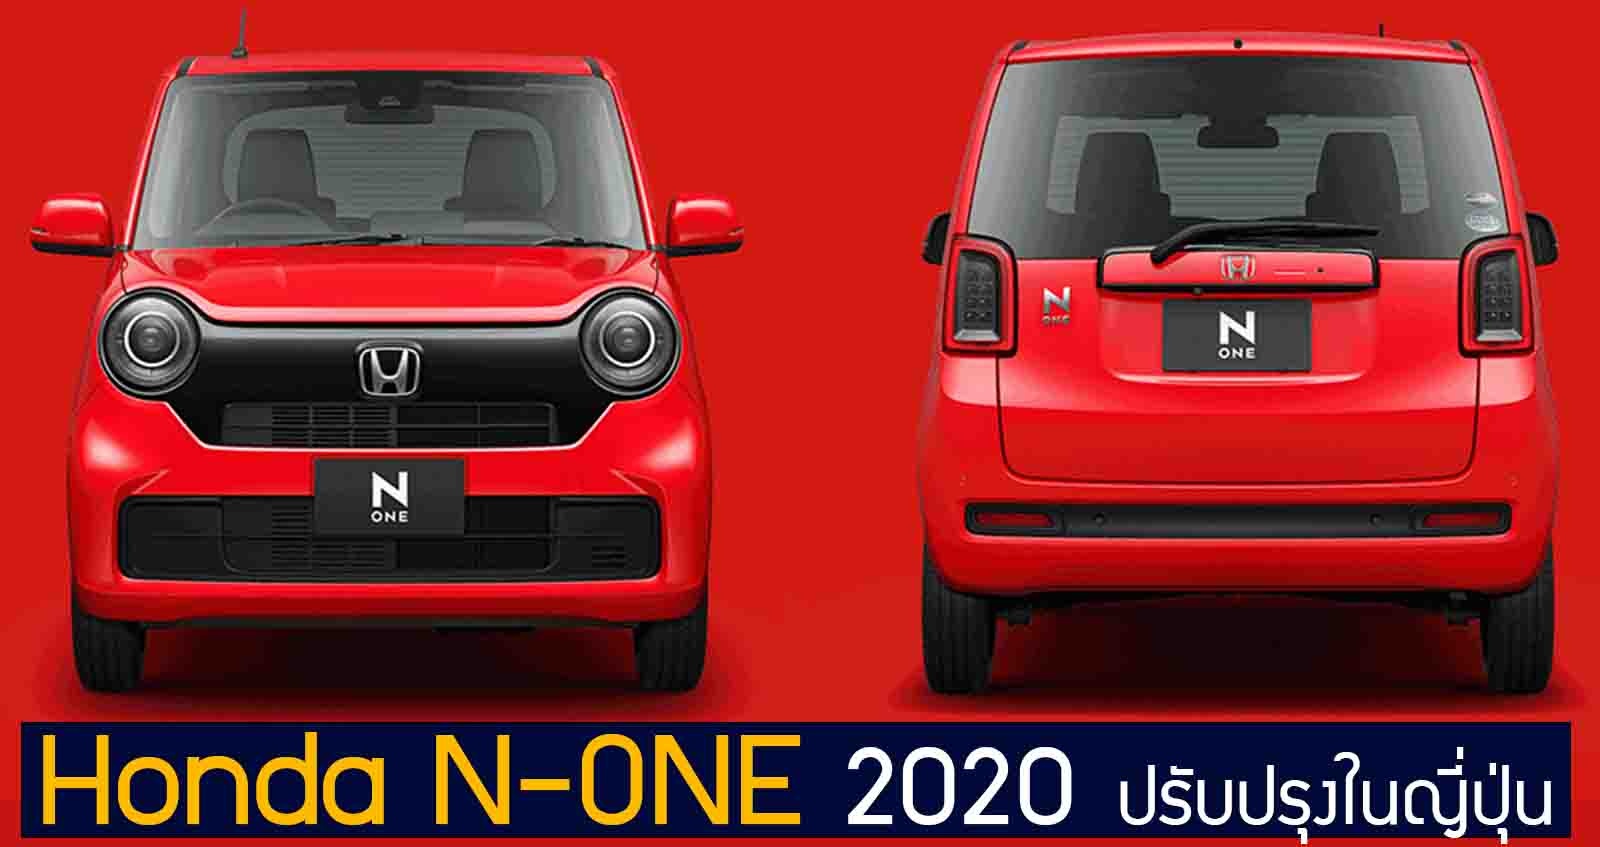 Honda N-ONE ปรับปรุงในญี่ปุ่น + Honda SENSING ทุกรุ่นย่อย